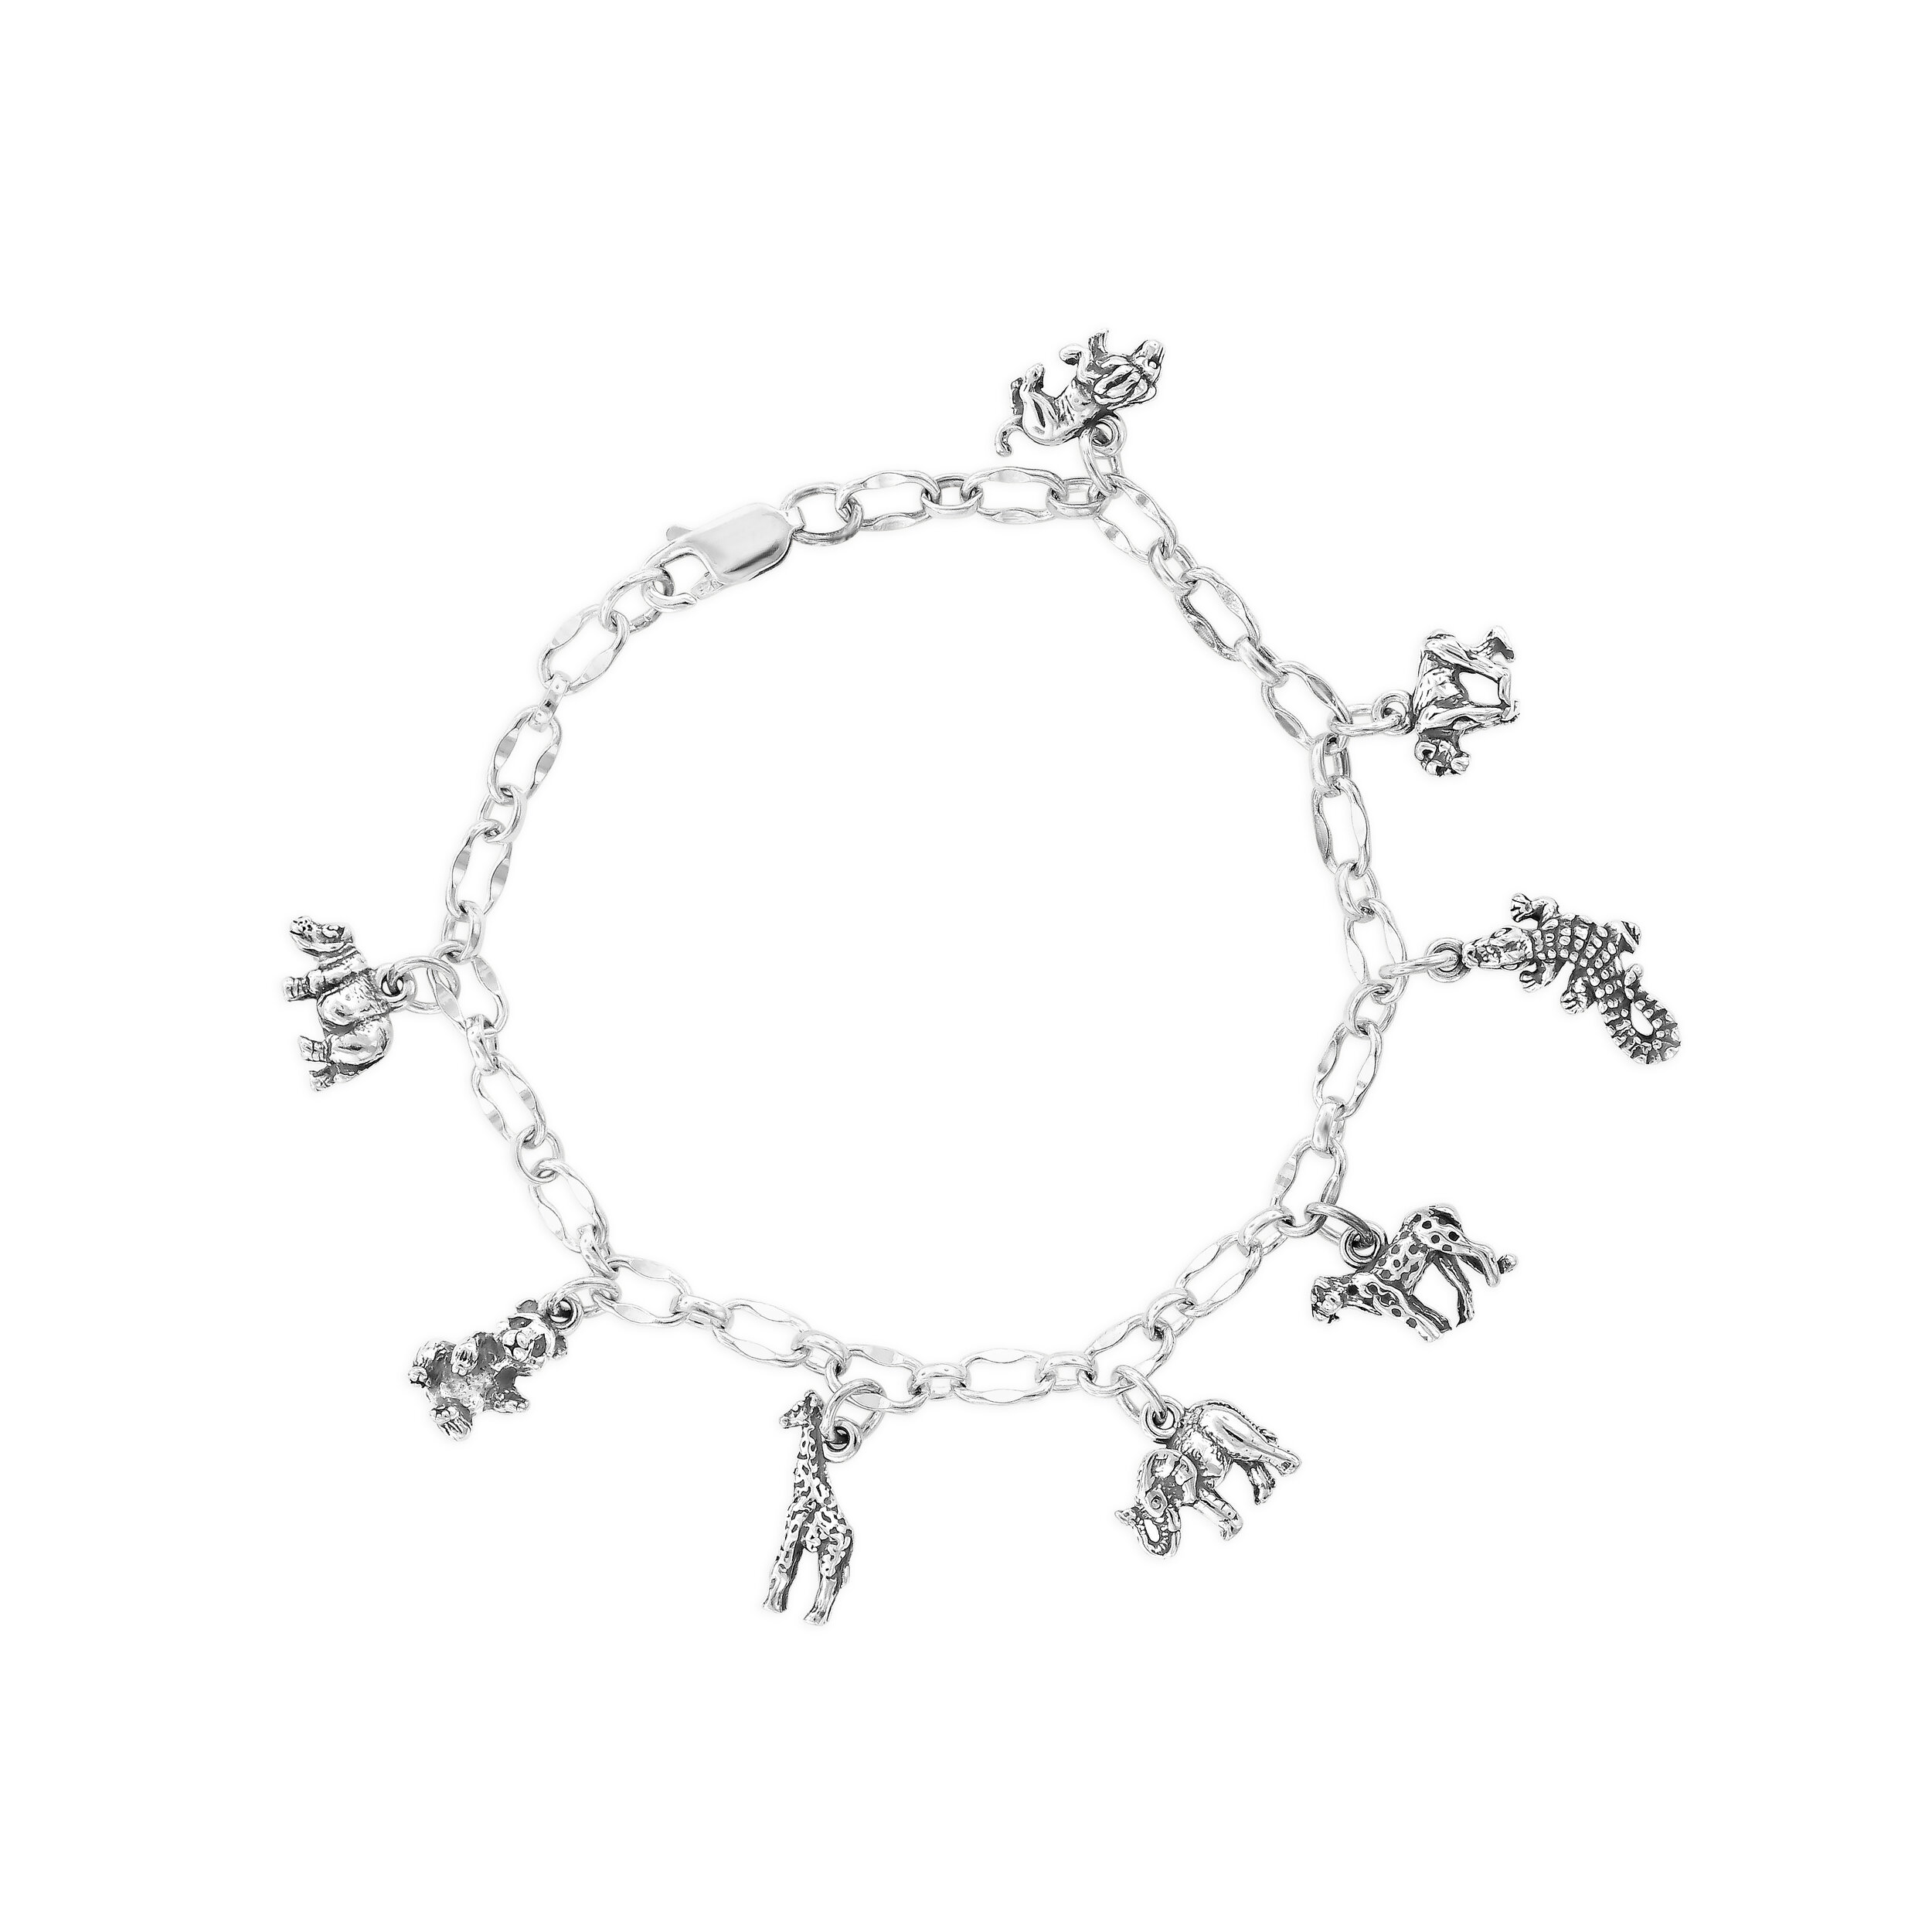 Farm Animal Charm Bracelet - Sterling Silver Bracelet with Cow, Horse, –  Mark Poulin Jewelry